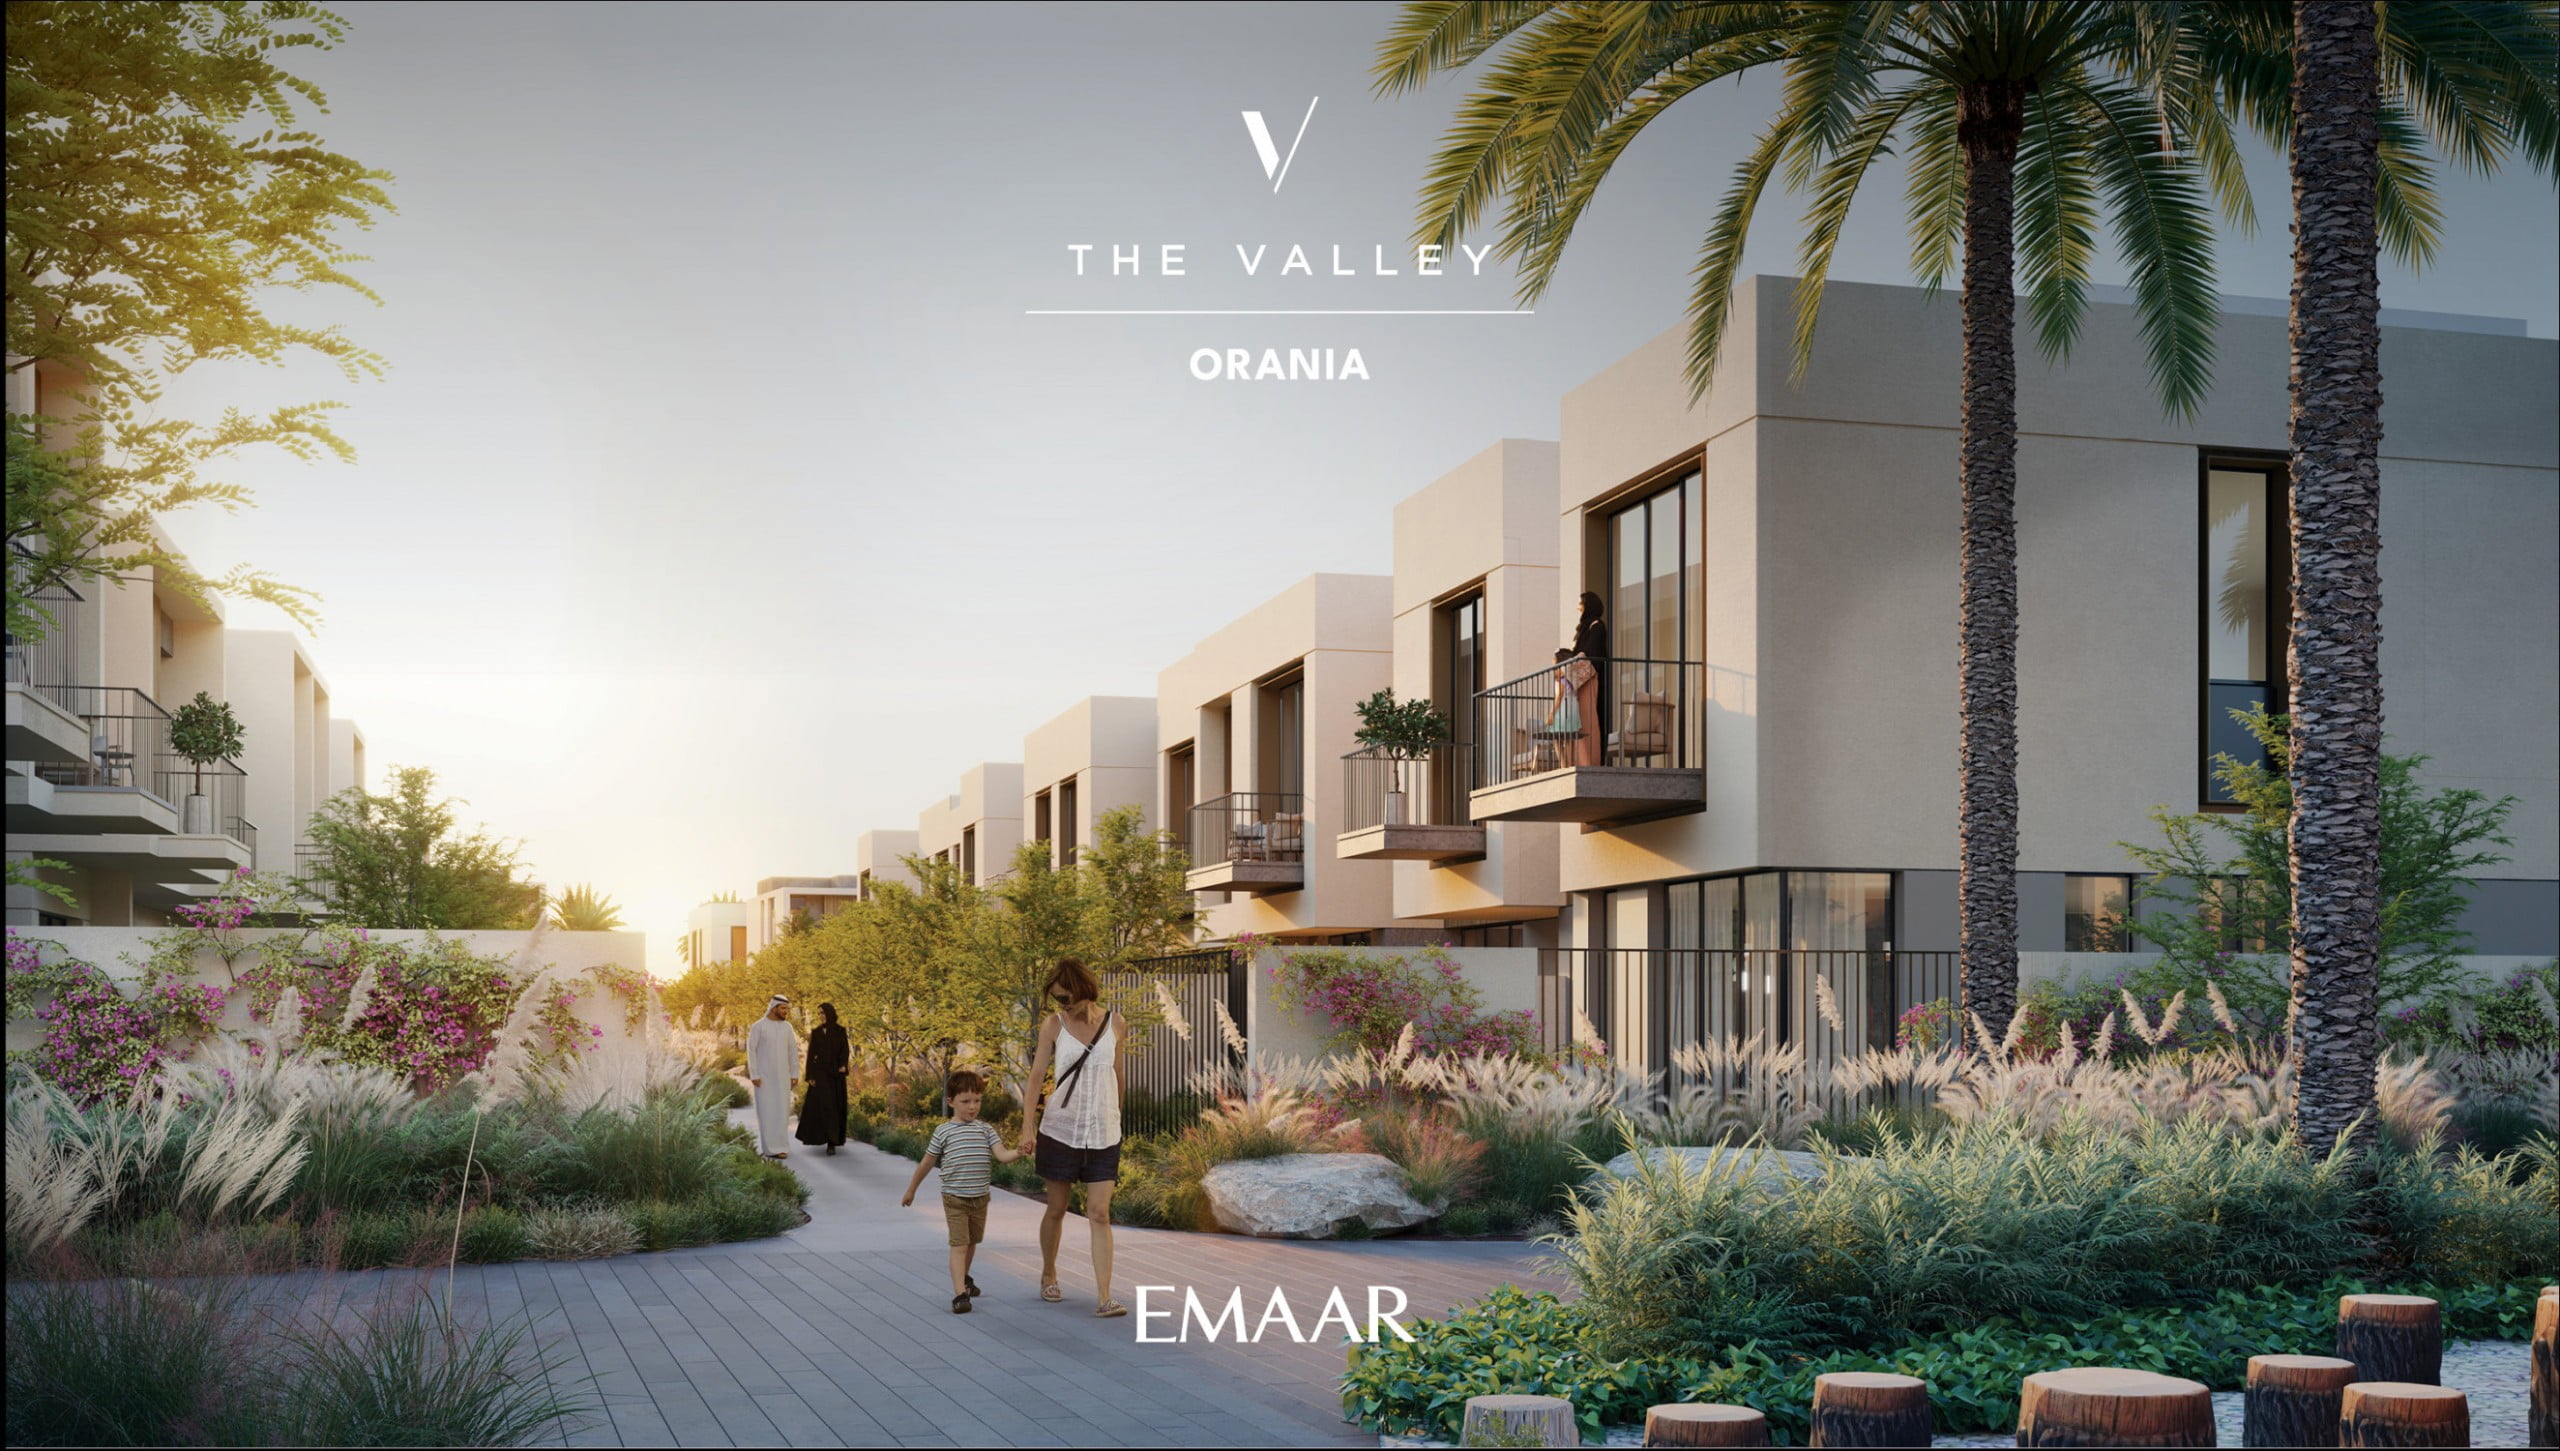 ORANIA THE VALLEY EMAAR 01 scaled - Immobilier Dubai